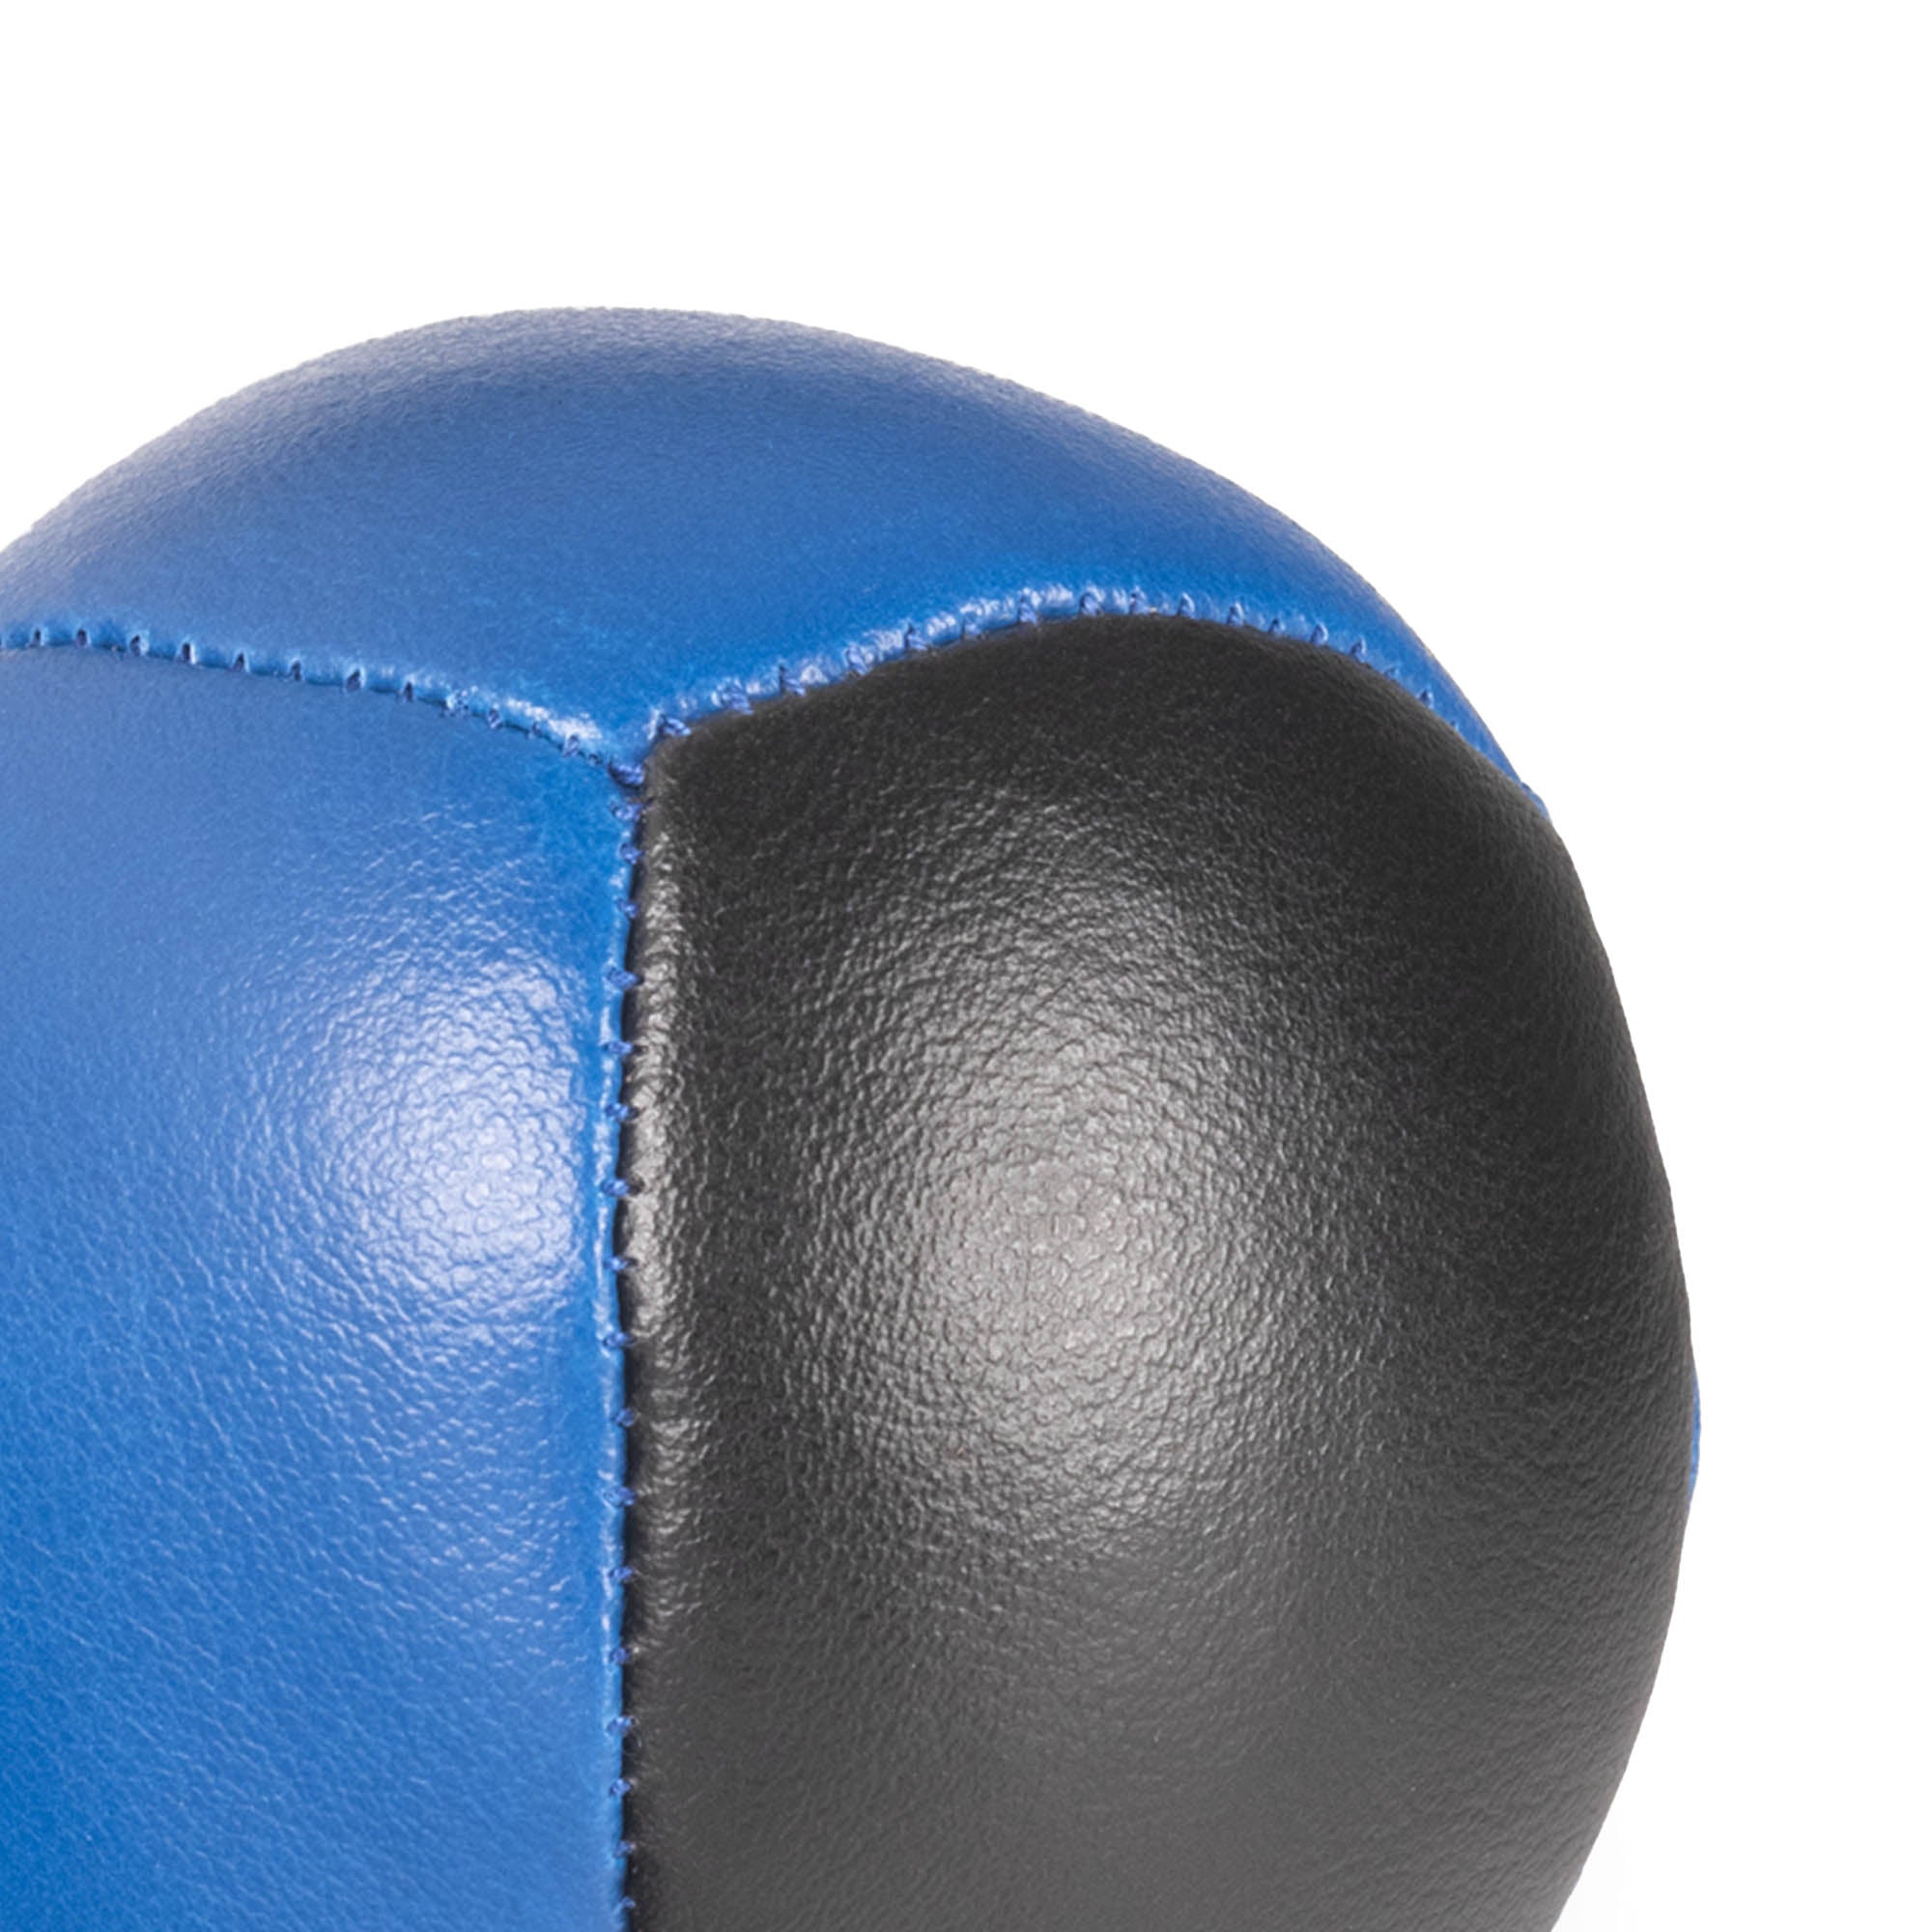 Firetoys 110g thud juggling ball, close up stitching blue/black